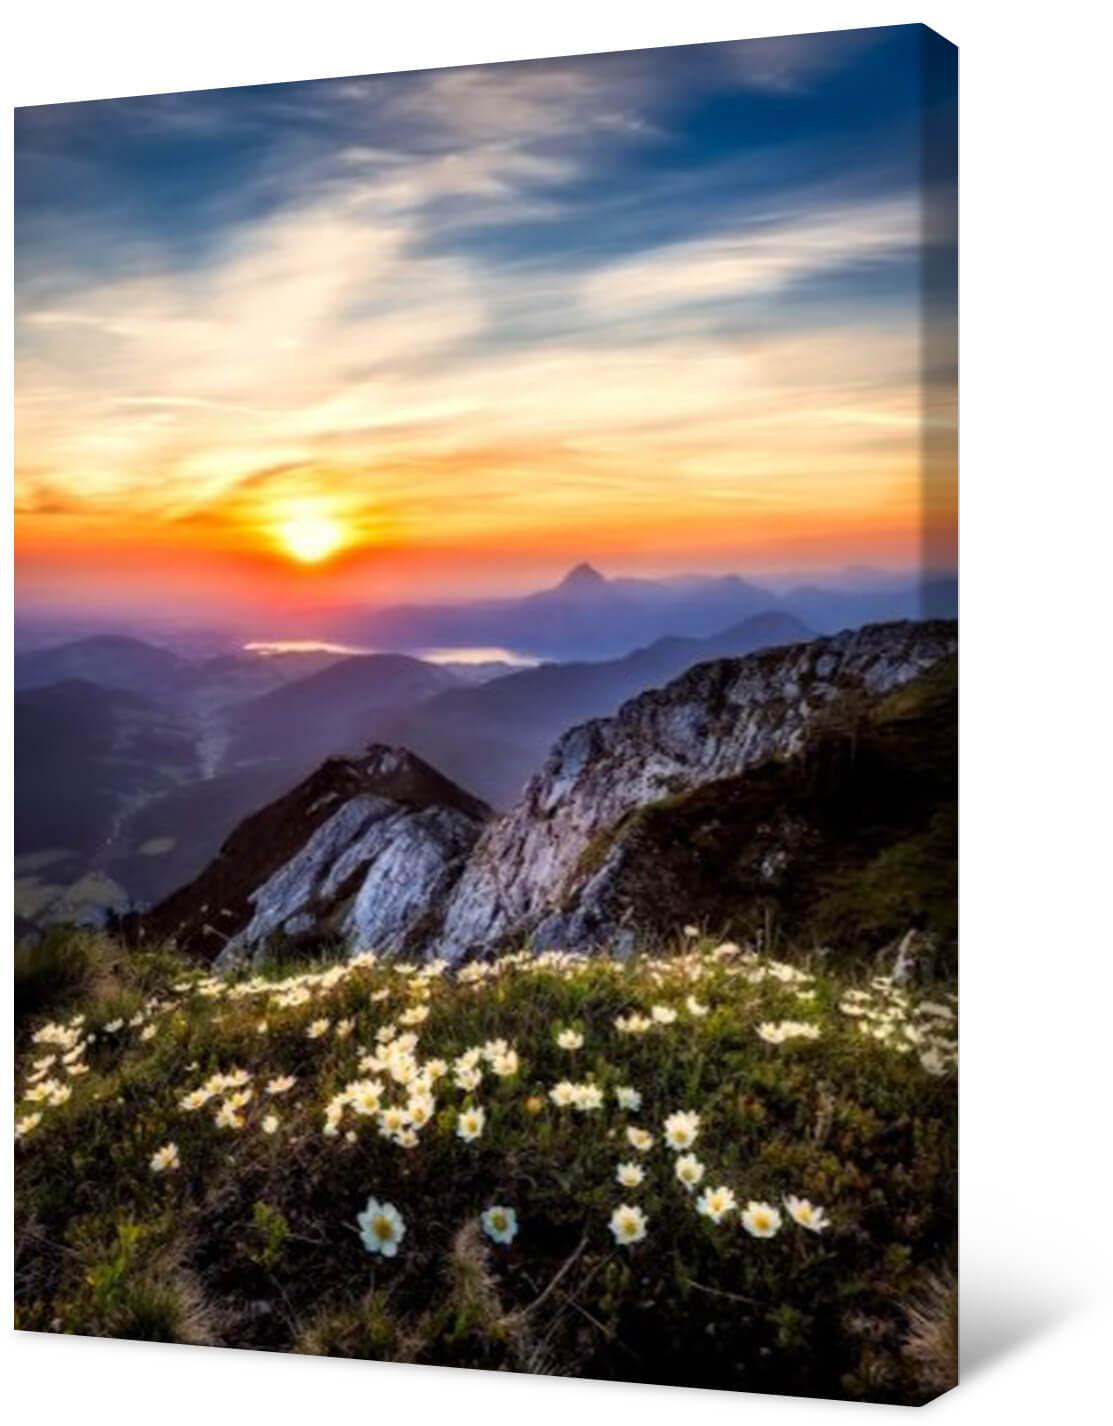 Bild Fotomalerei auf Leinwand - Berge bei Sonnenuntergang